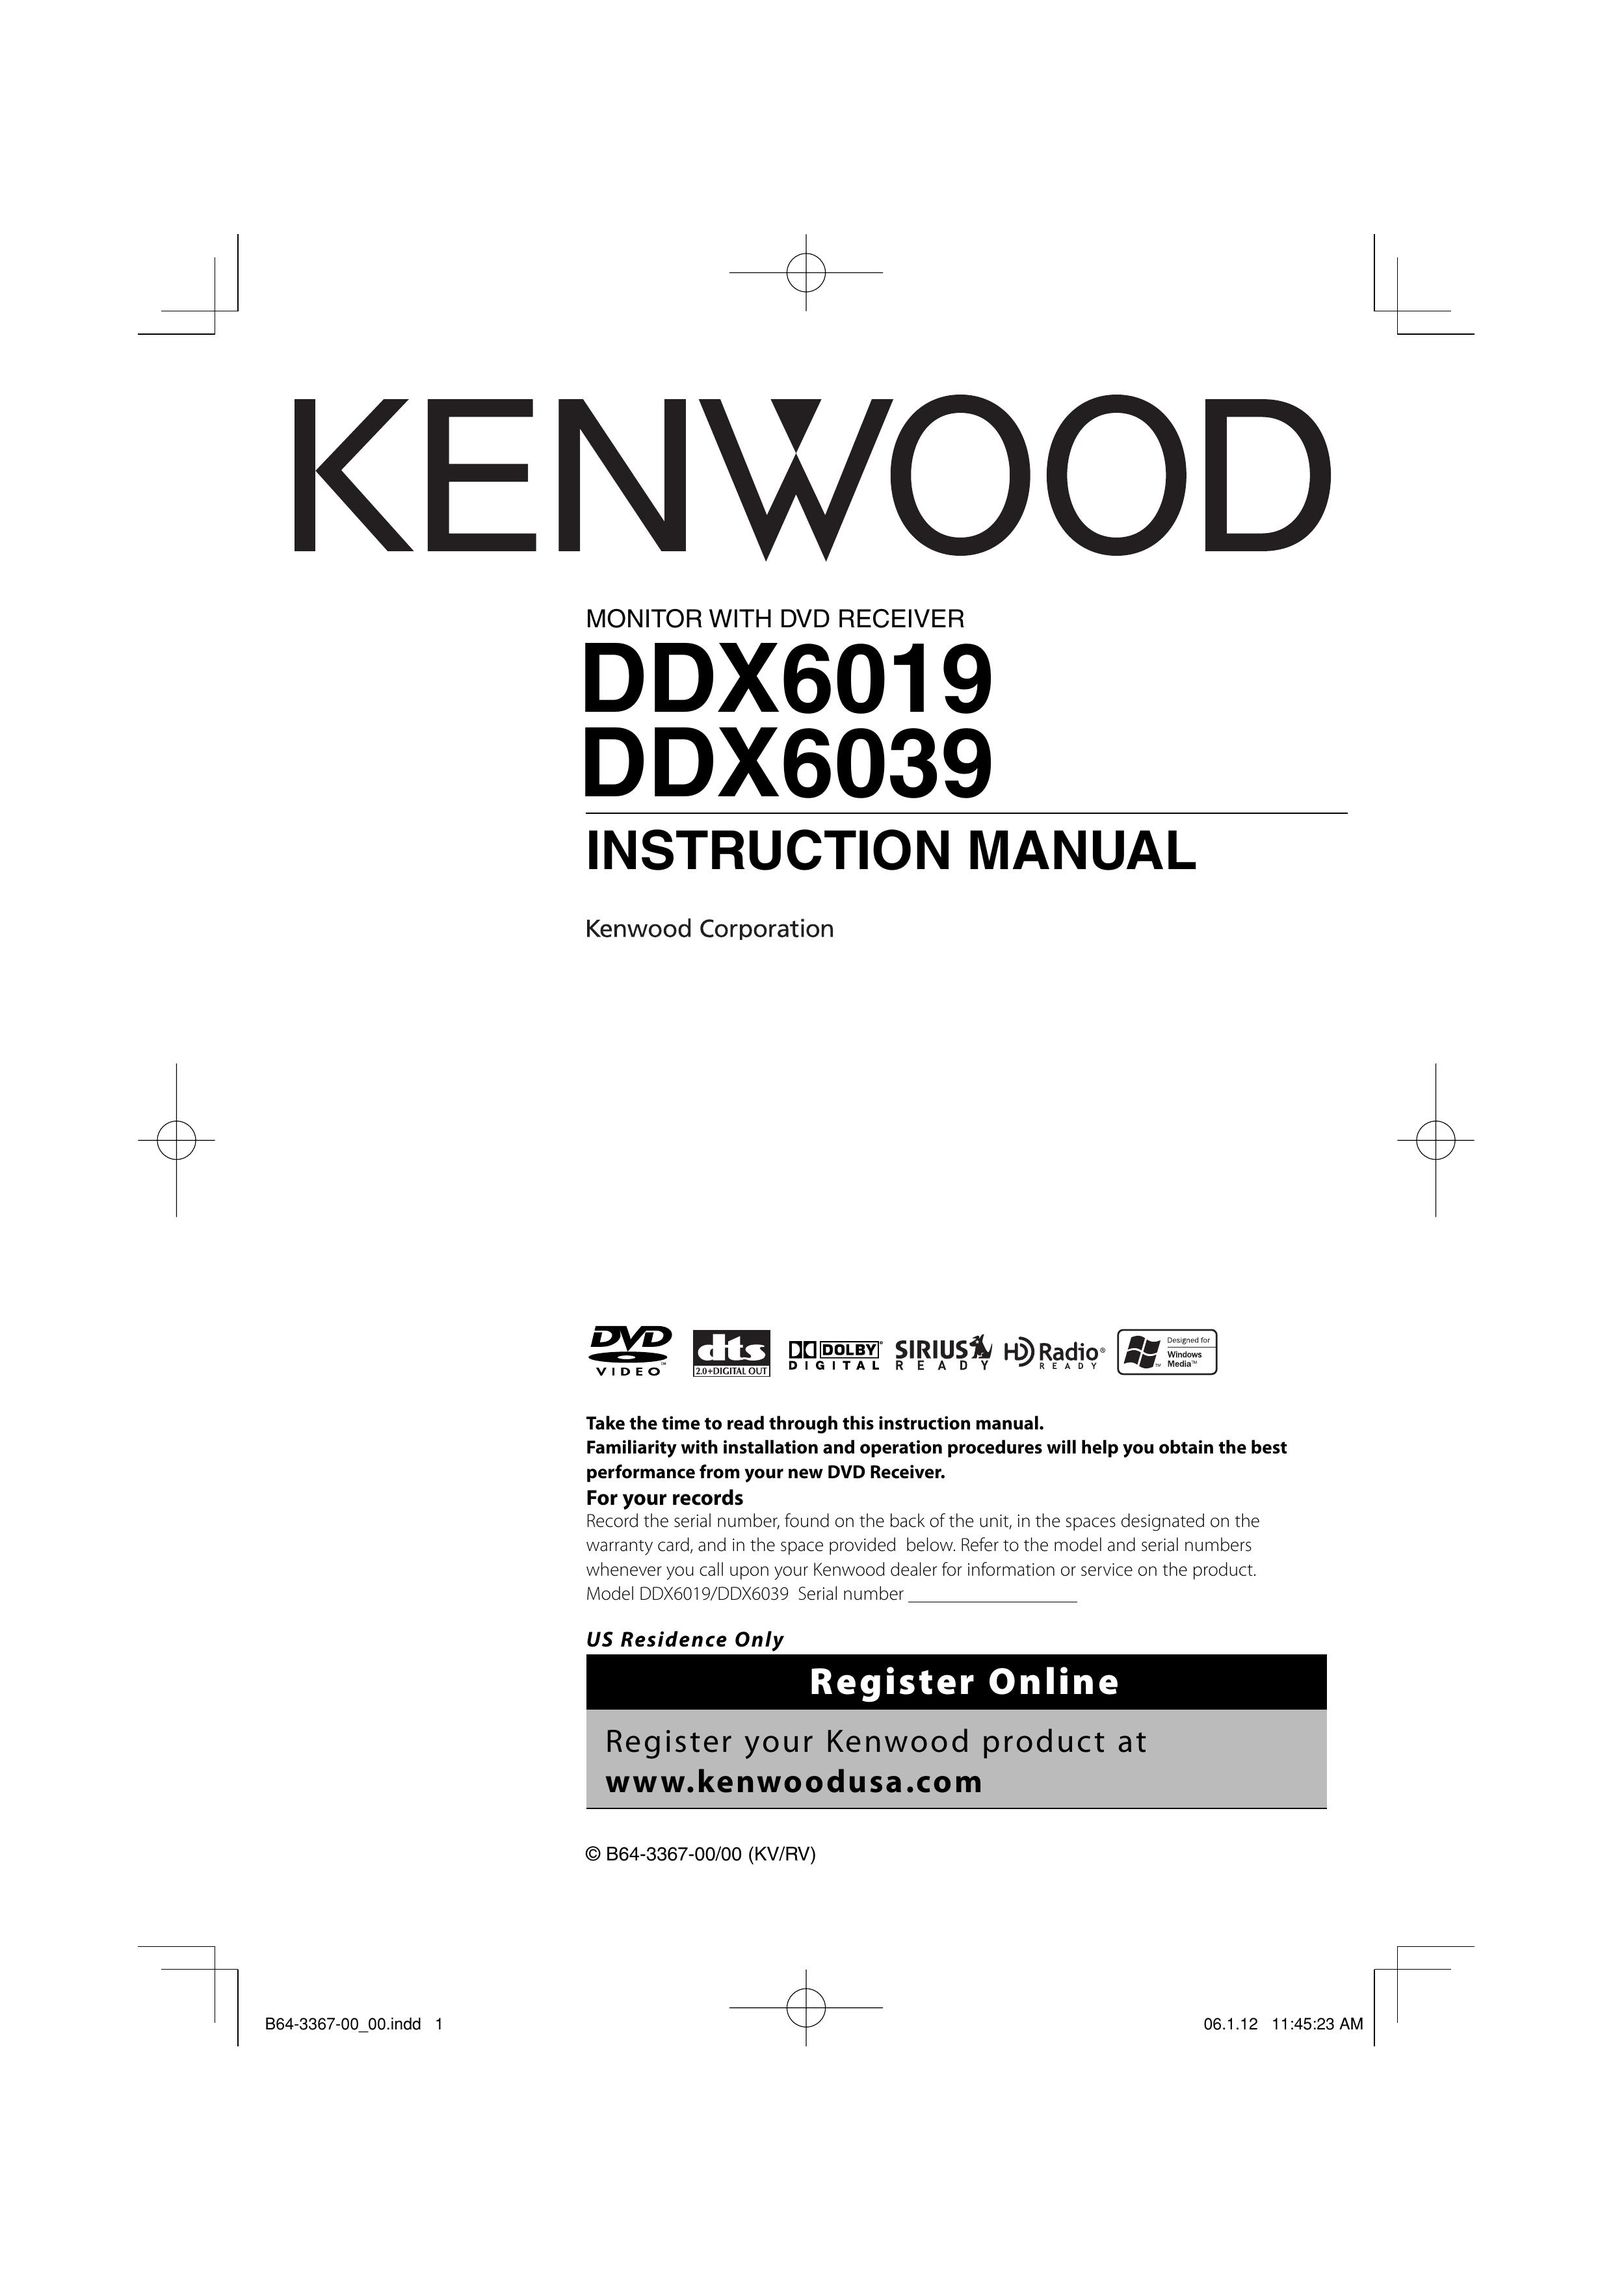 Kenwood DDX6039 Portable DVD Player User Manual